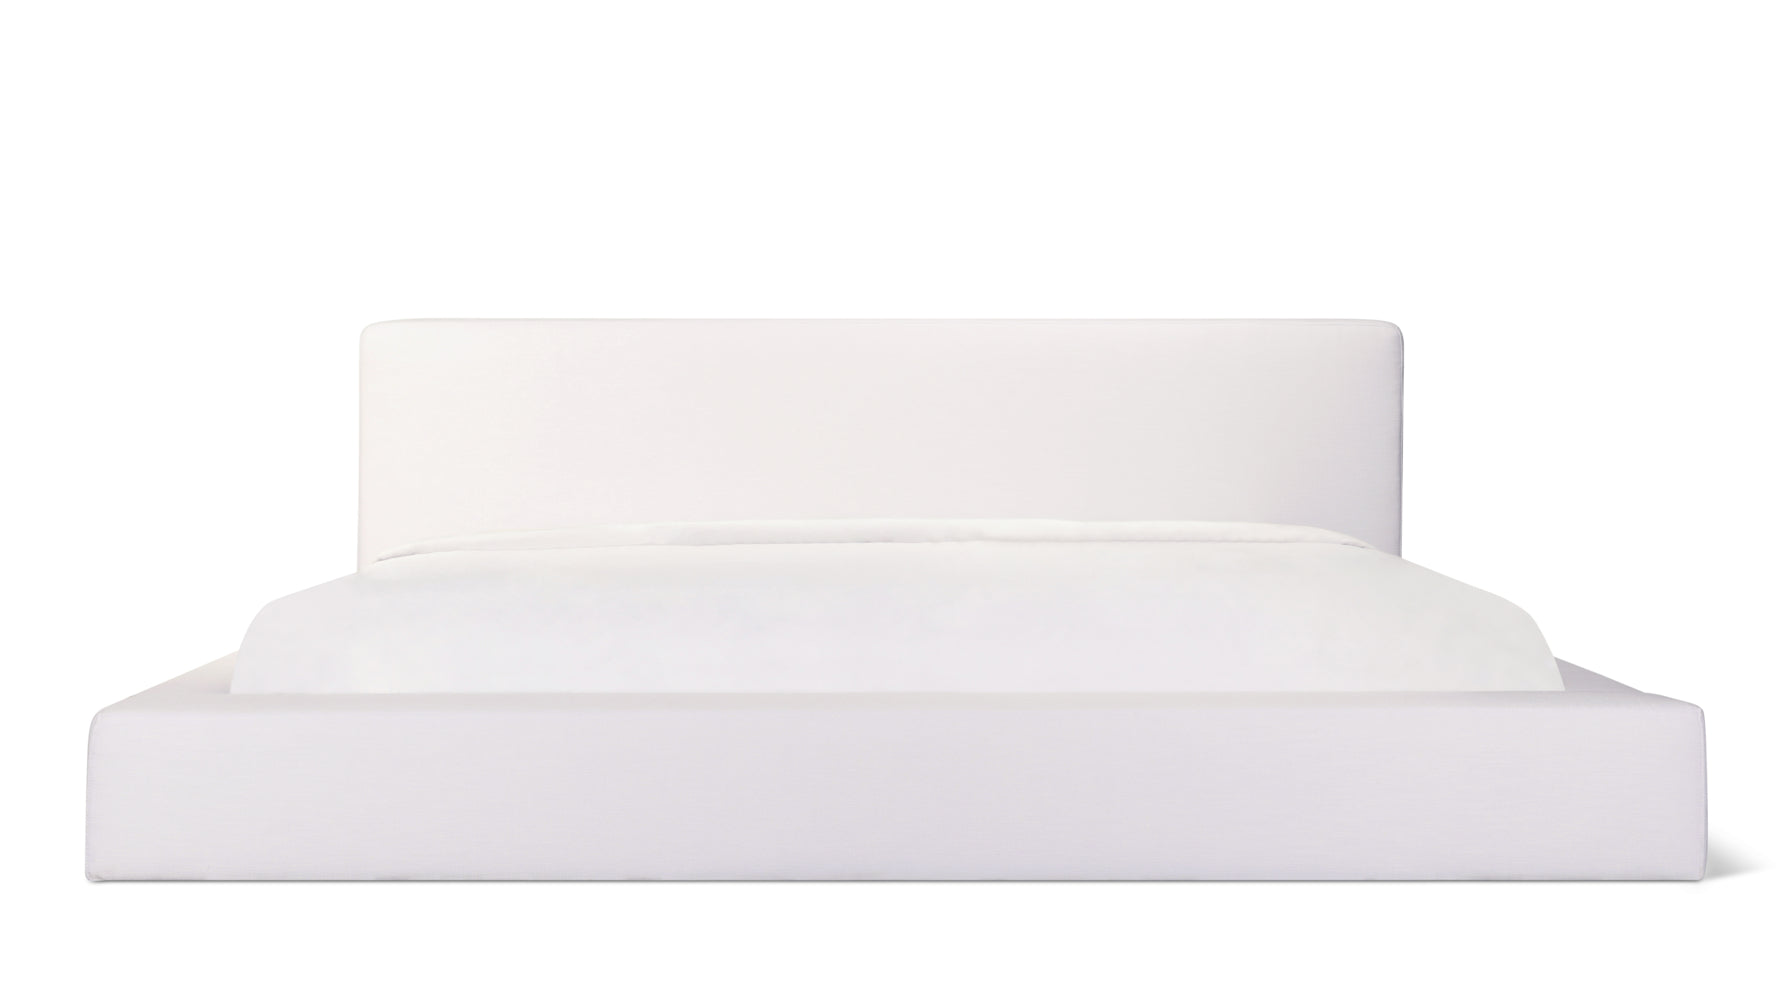 Movie Night™ Bed, King, White - Image 8